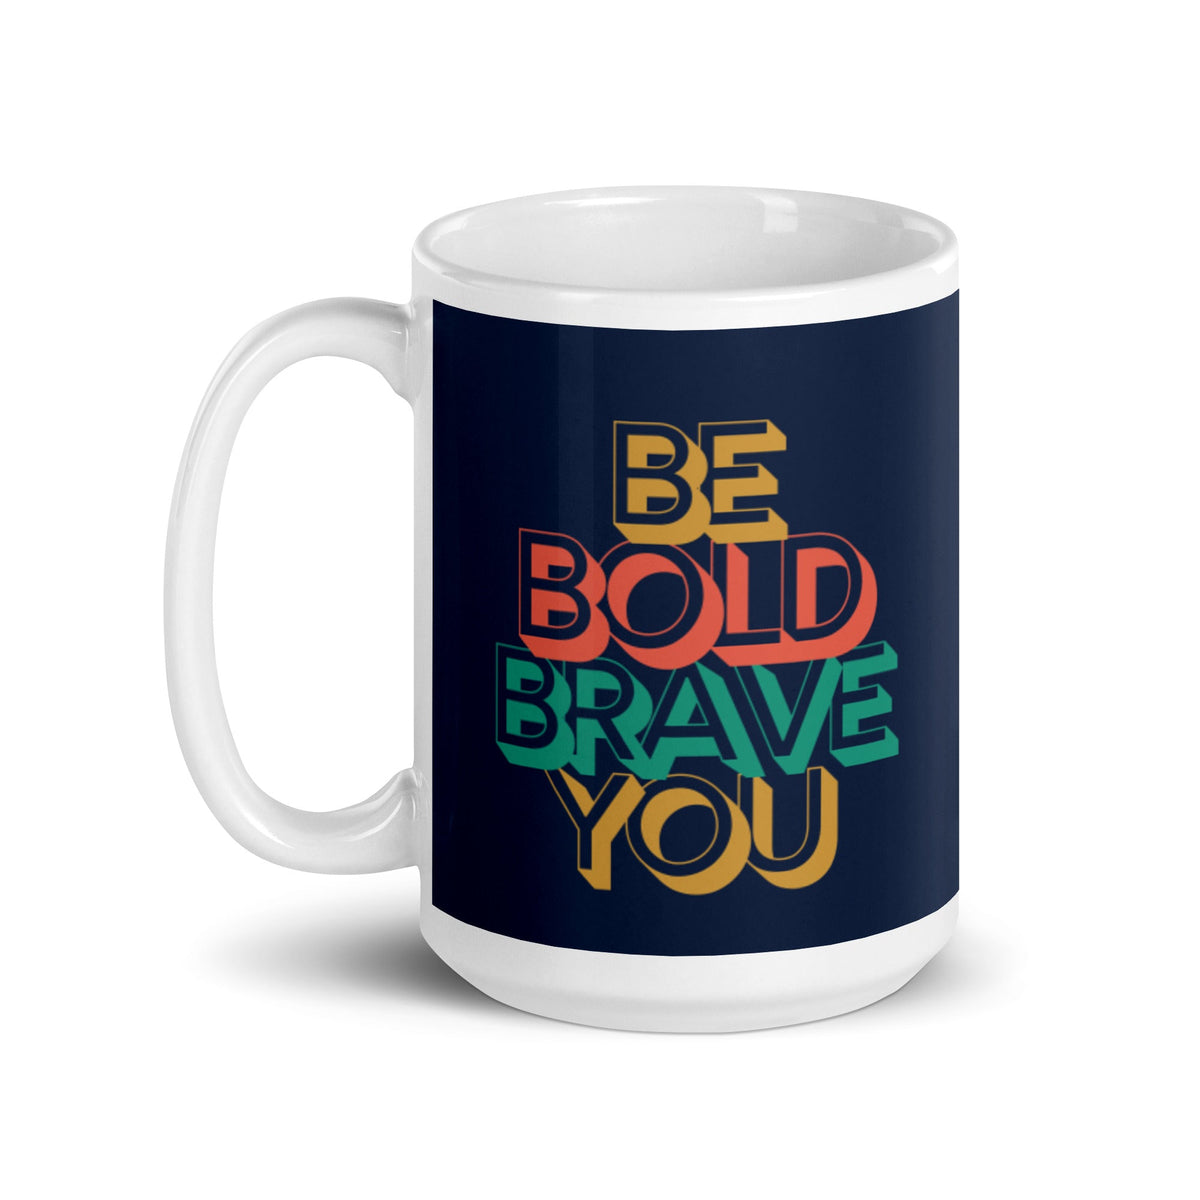 BE BOLD BRAVE YOU - Inspirational 15oz Mug - 1